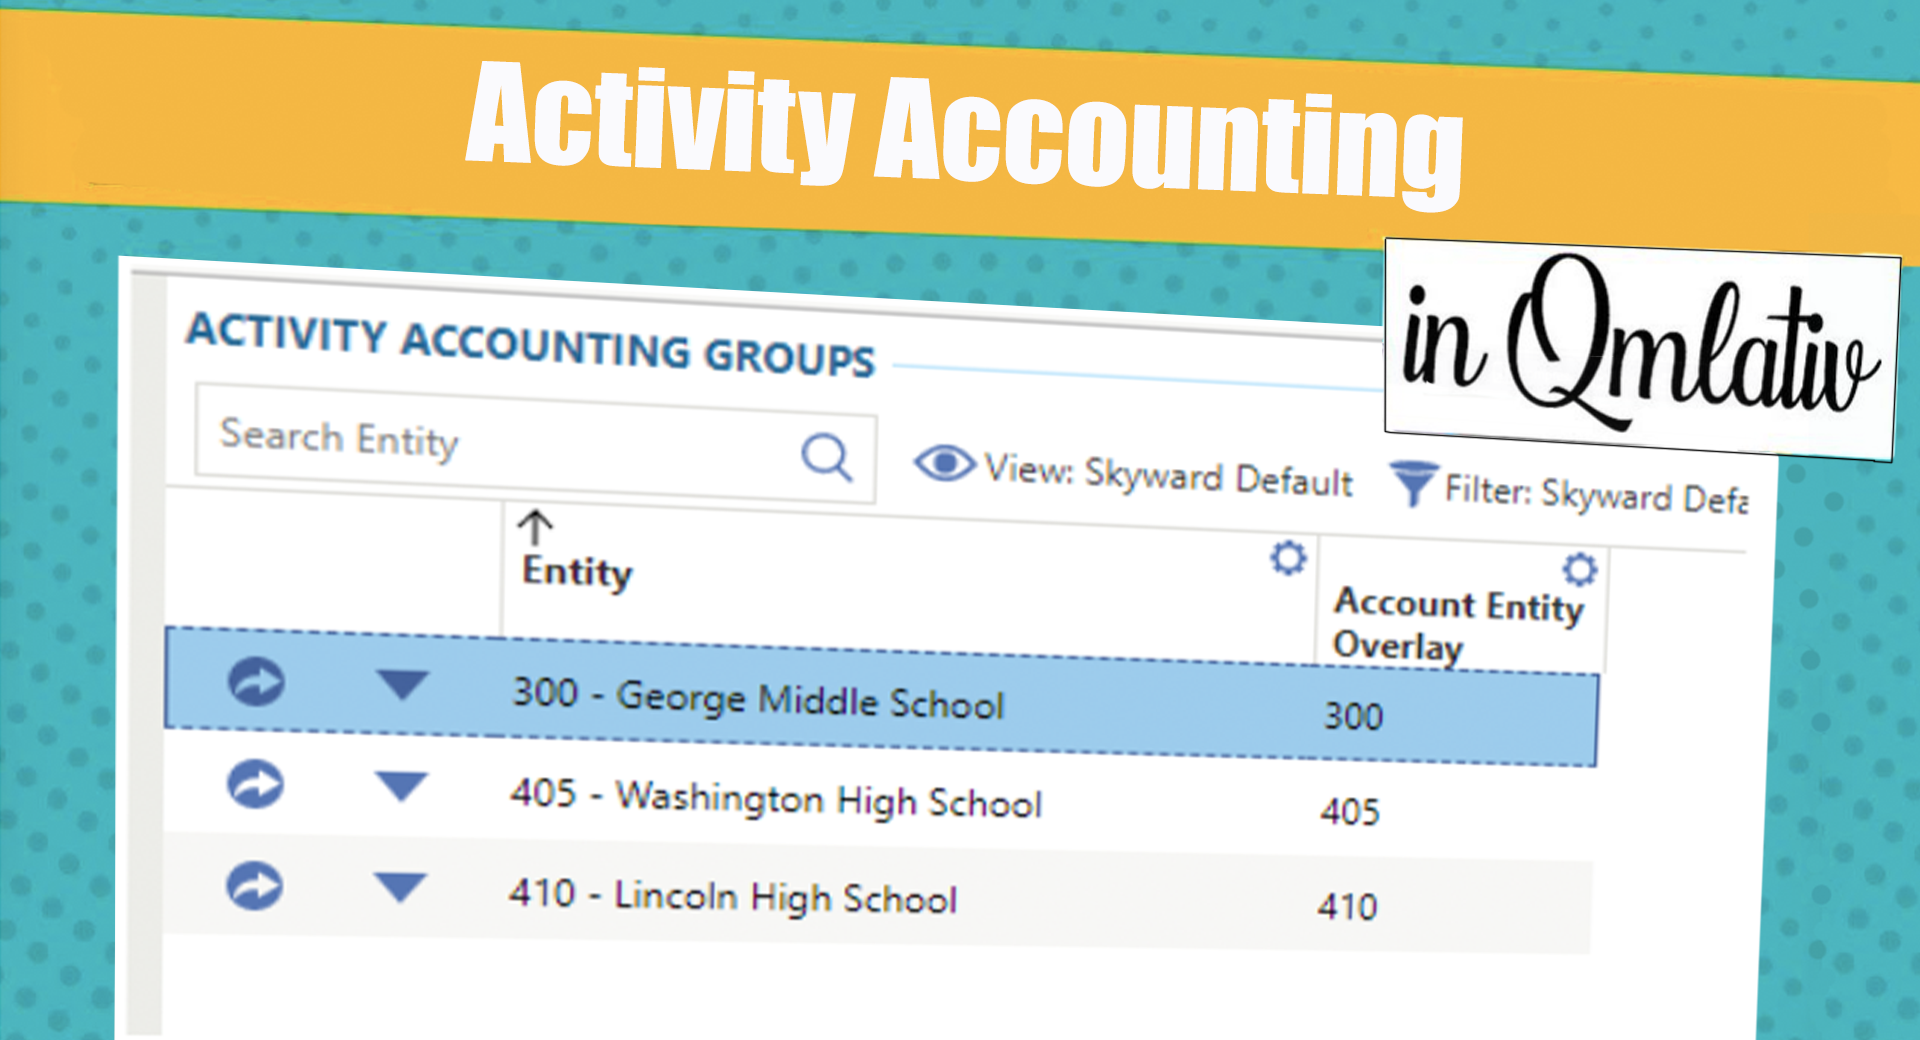 Qmlativ Spotlight: Activity Accounting